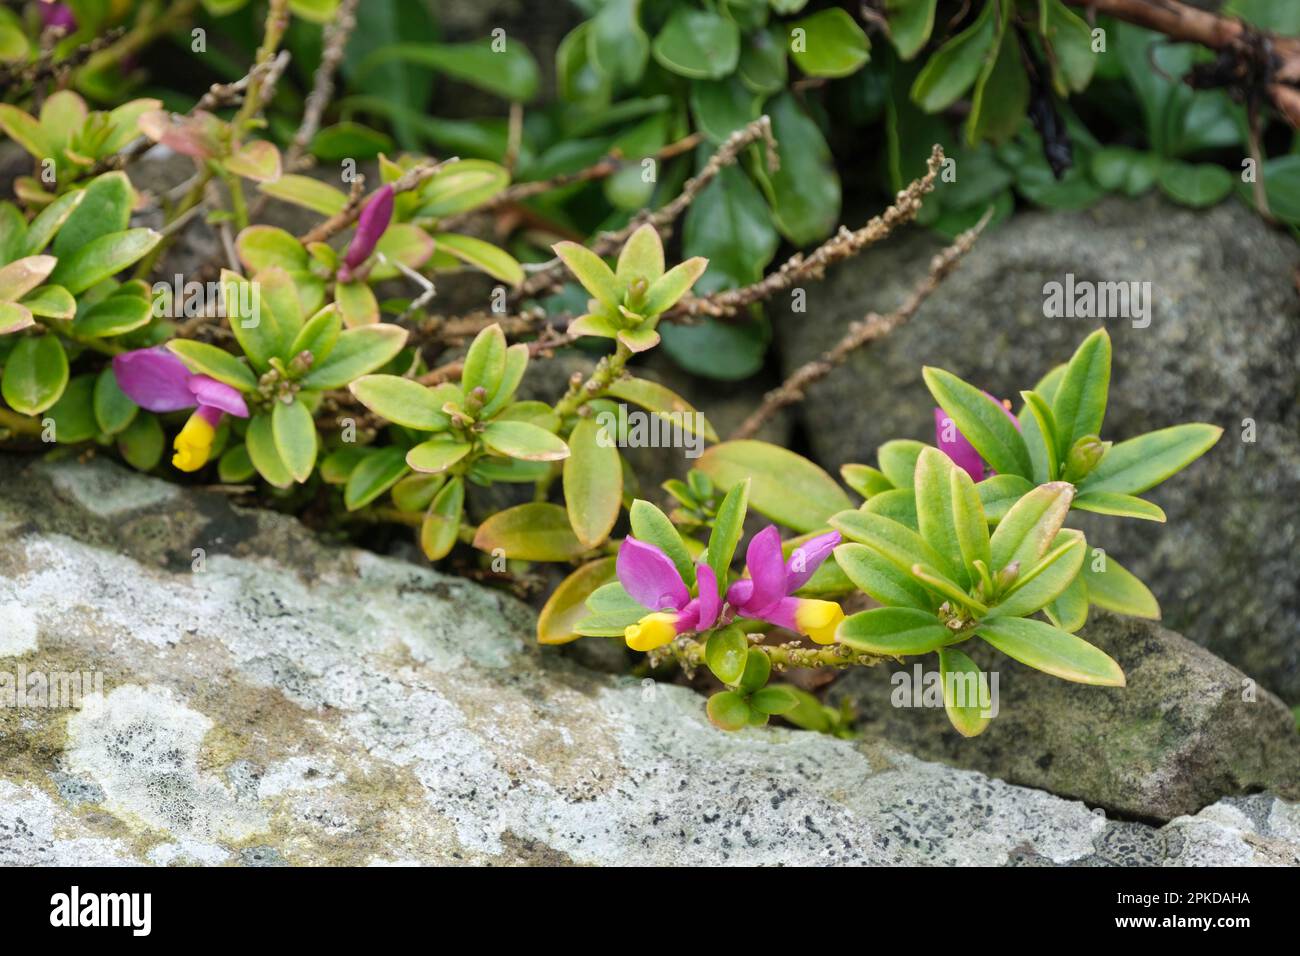 Polygala chamaebuxus grandiflora, milkwort, alpine shrublet, yellow/purple pea-like flowers Stock Photo